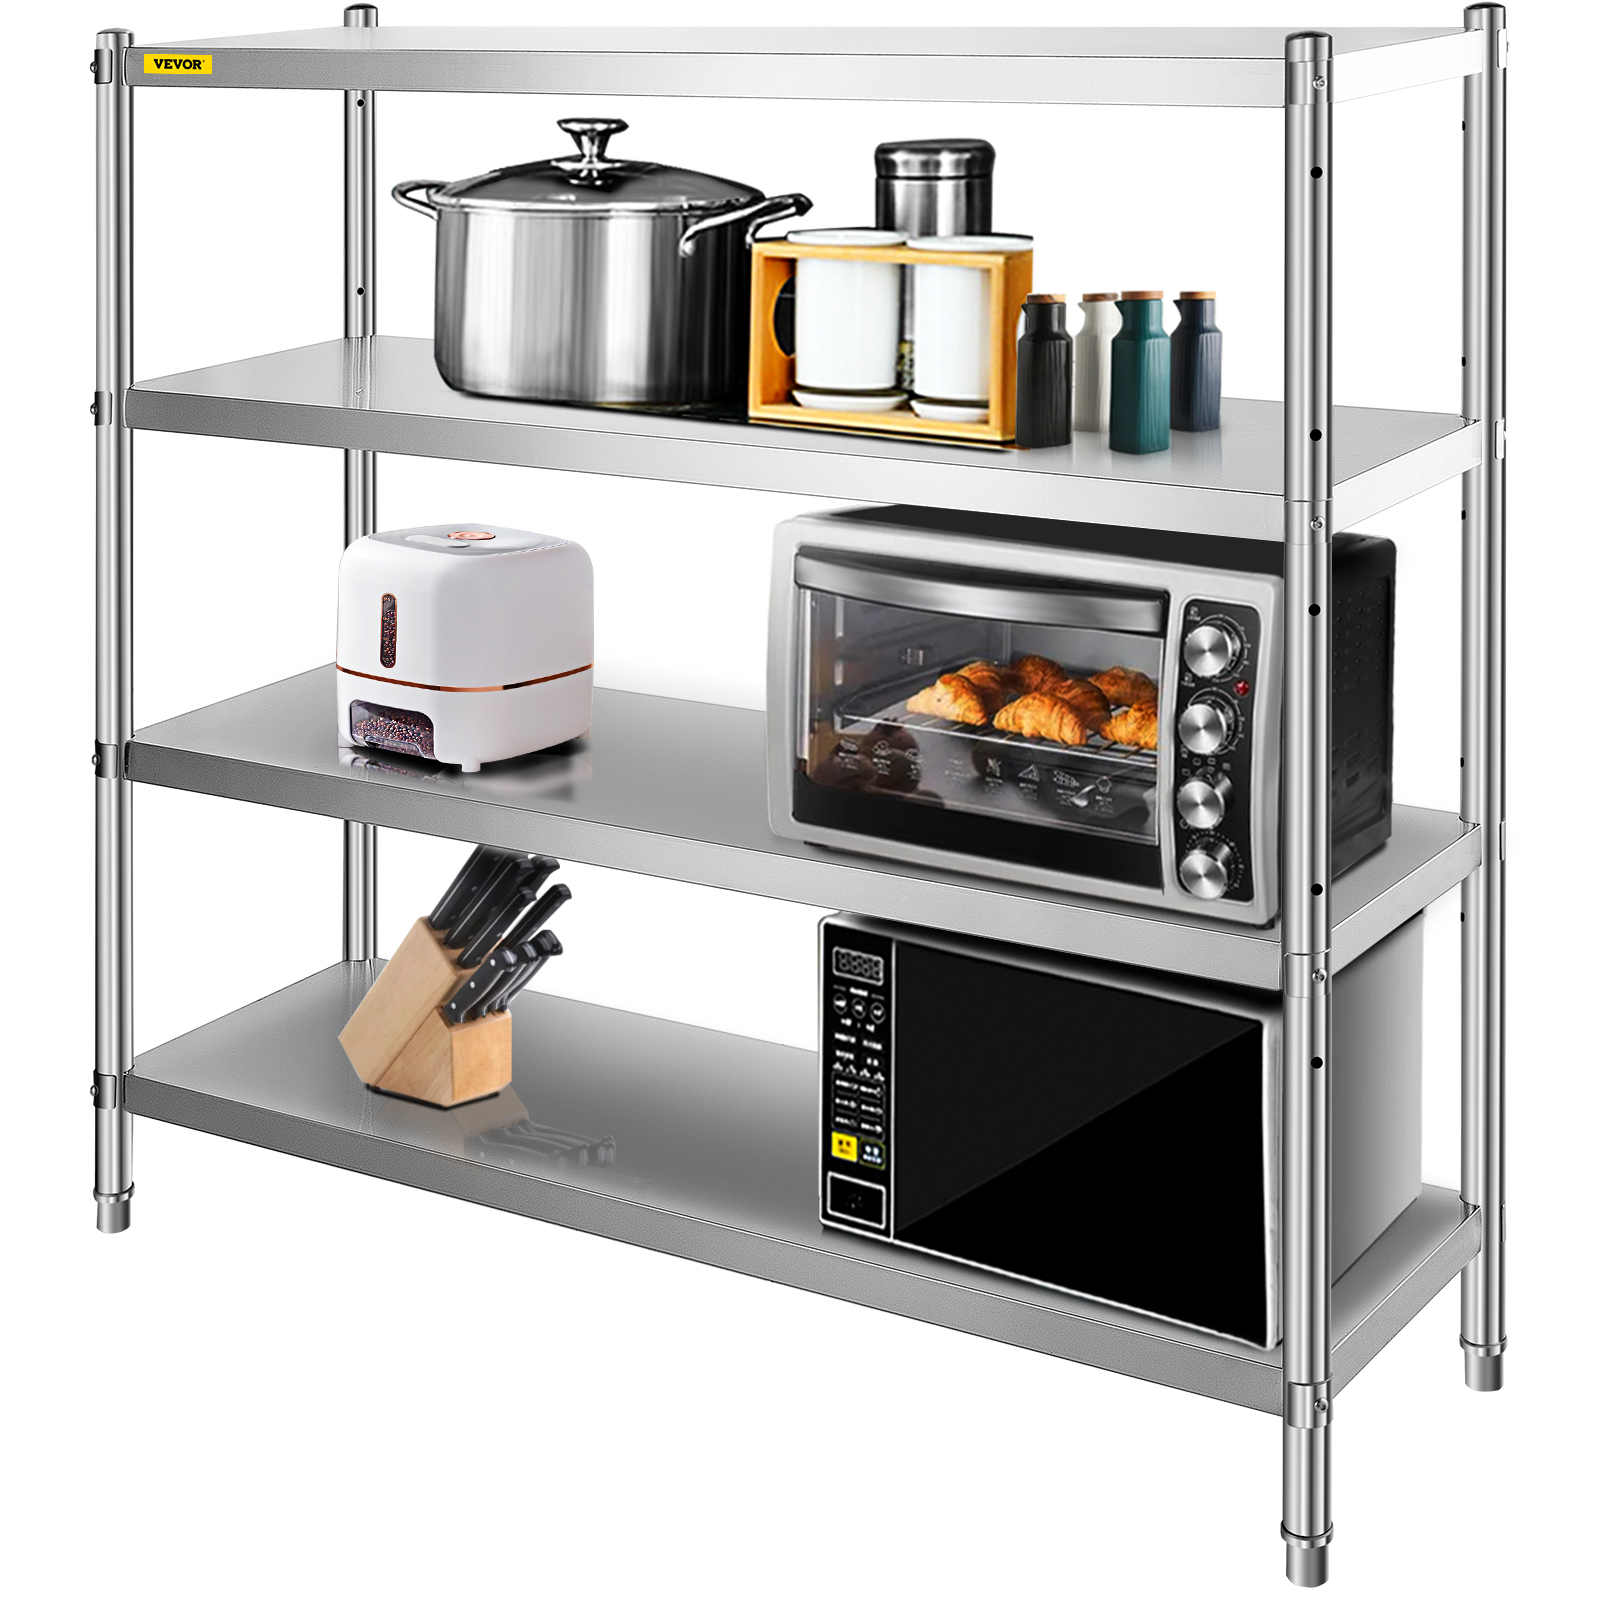 Kitchen Shelves Shelf Rack Stainless Steel Shelving Organizer Units 60*60 Inch от Vevor Many GEOs